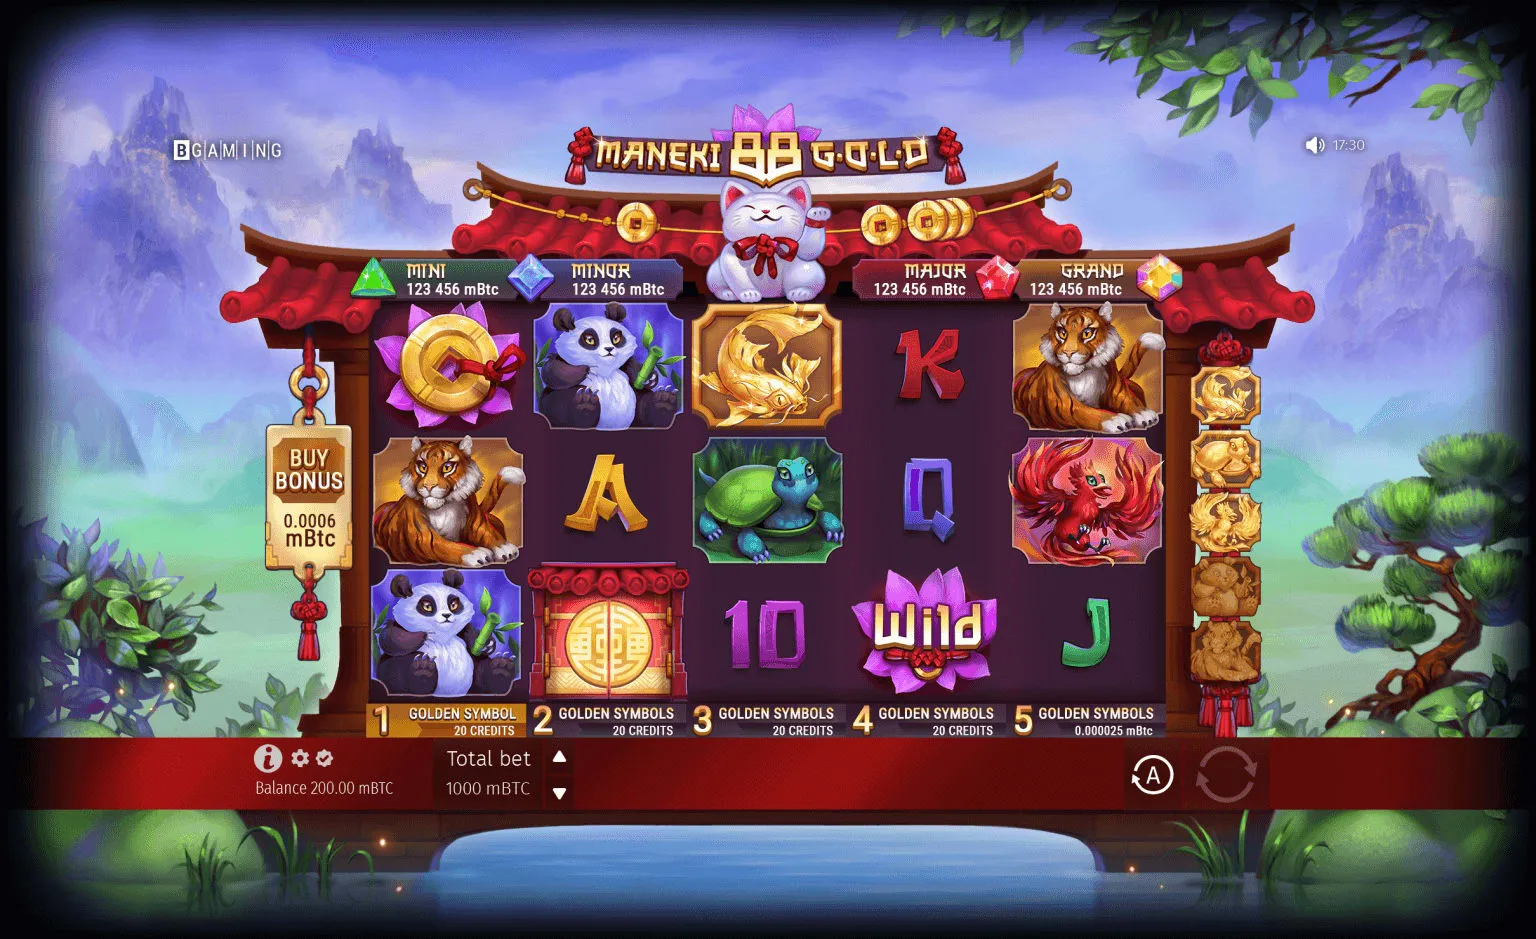 Maneki 88 Gold Slot Free Spins